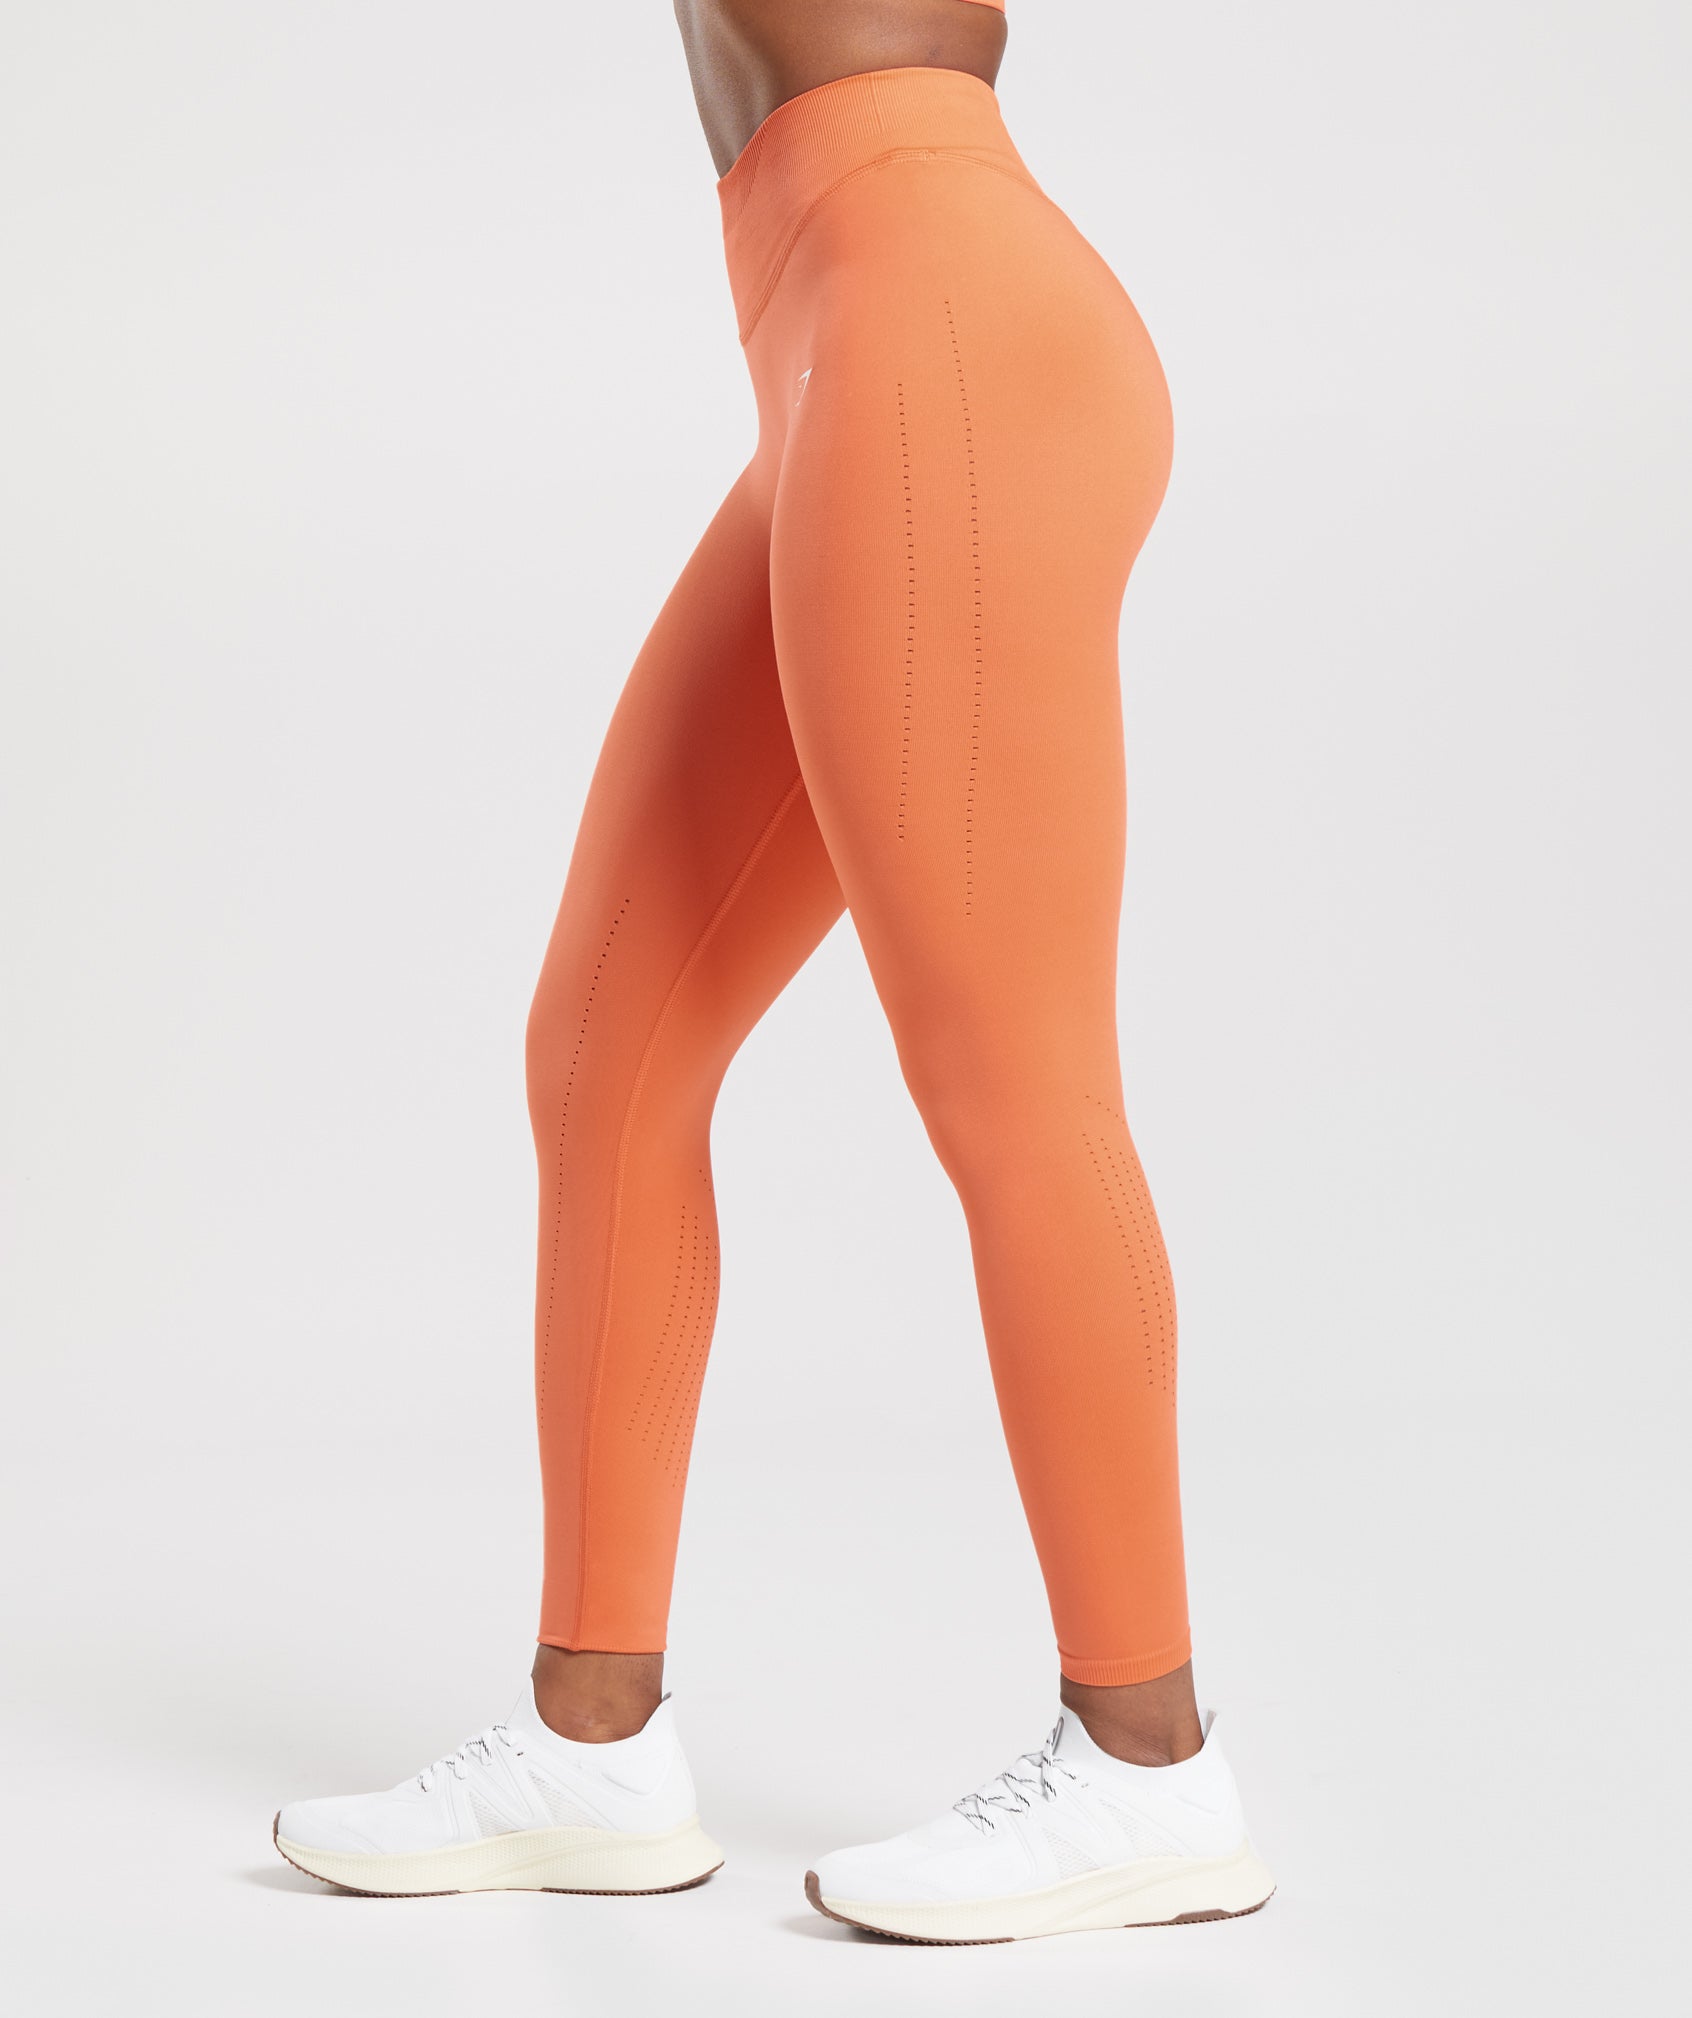 Gymshark Dry Orange High Waist Perforated Cropped Leggings Size XS